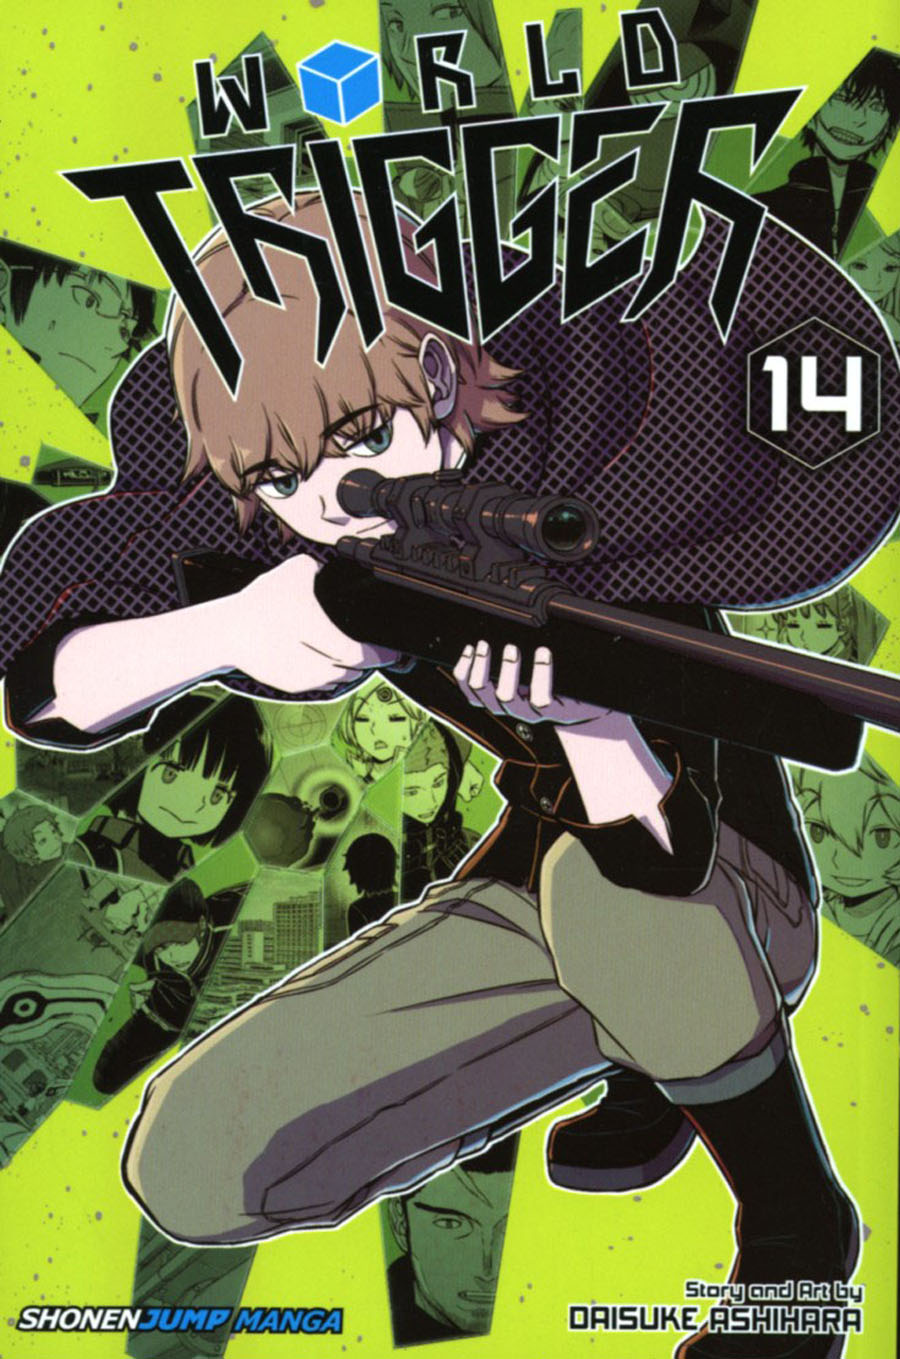 World Trigger Manga Volume 10 by Daisuke Ashihara Jump Comics Japanese